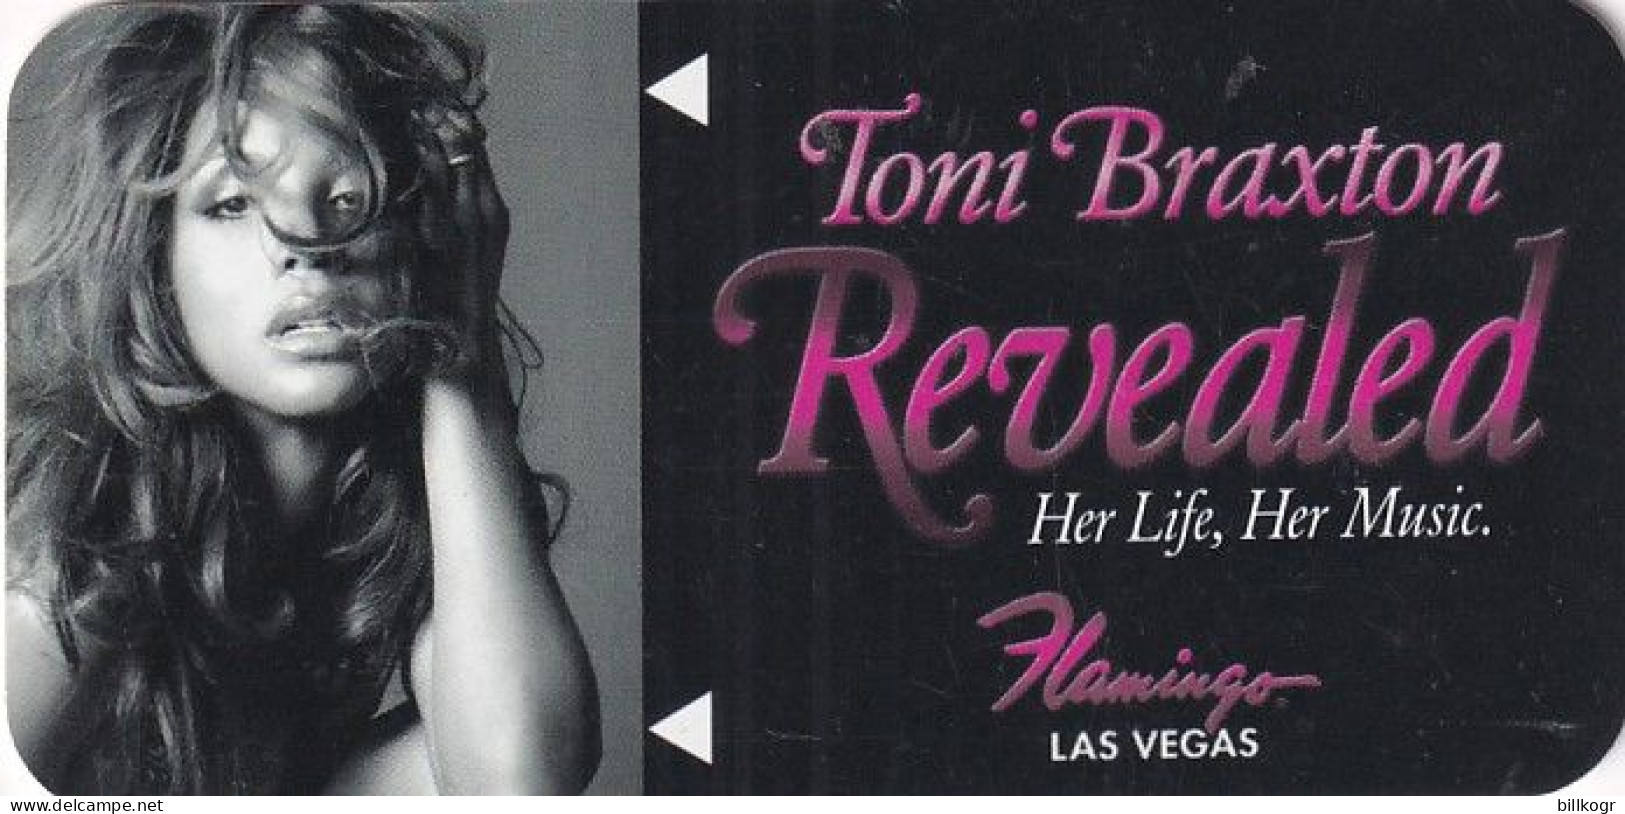 USA - Toni Braxton/Revealed, Westgate Resort Casino, Hotel Keycard, Used - Chiavi Elettroniche Di Alberghi